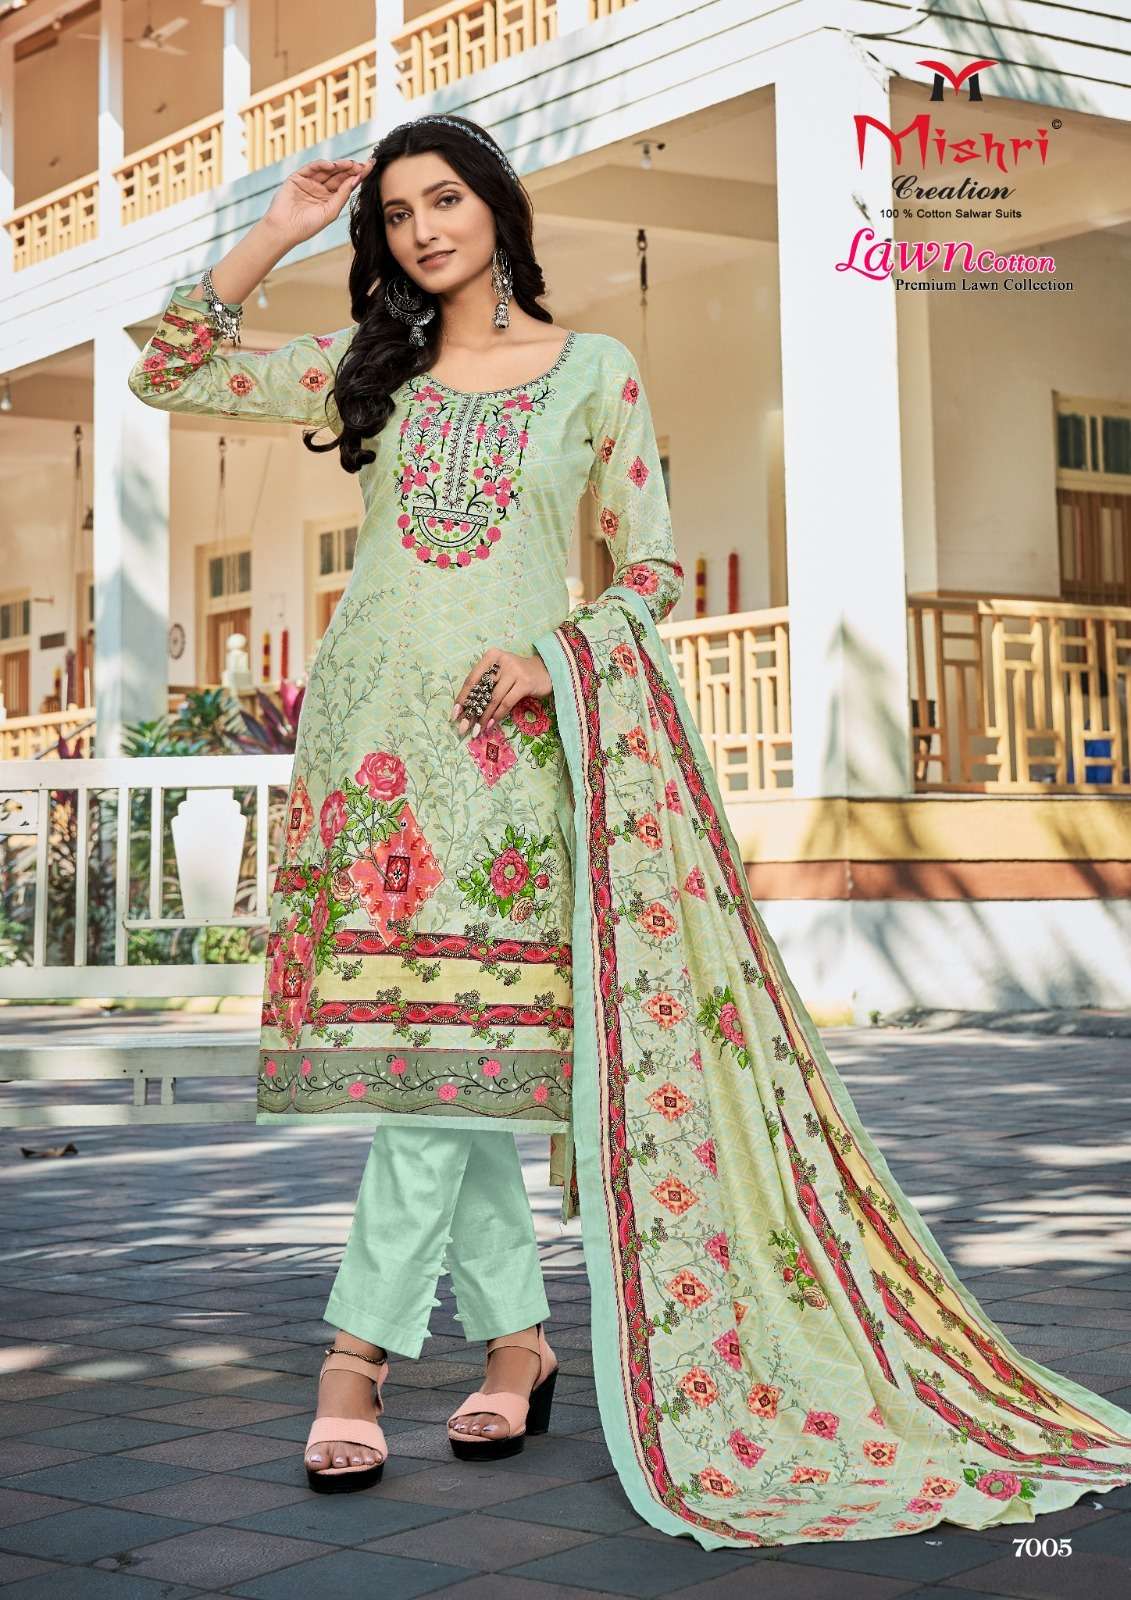 mishri creation lawn cotton vol-7 7001-7006 series unstich designer salwar kameez catalogue manufacturer surat 